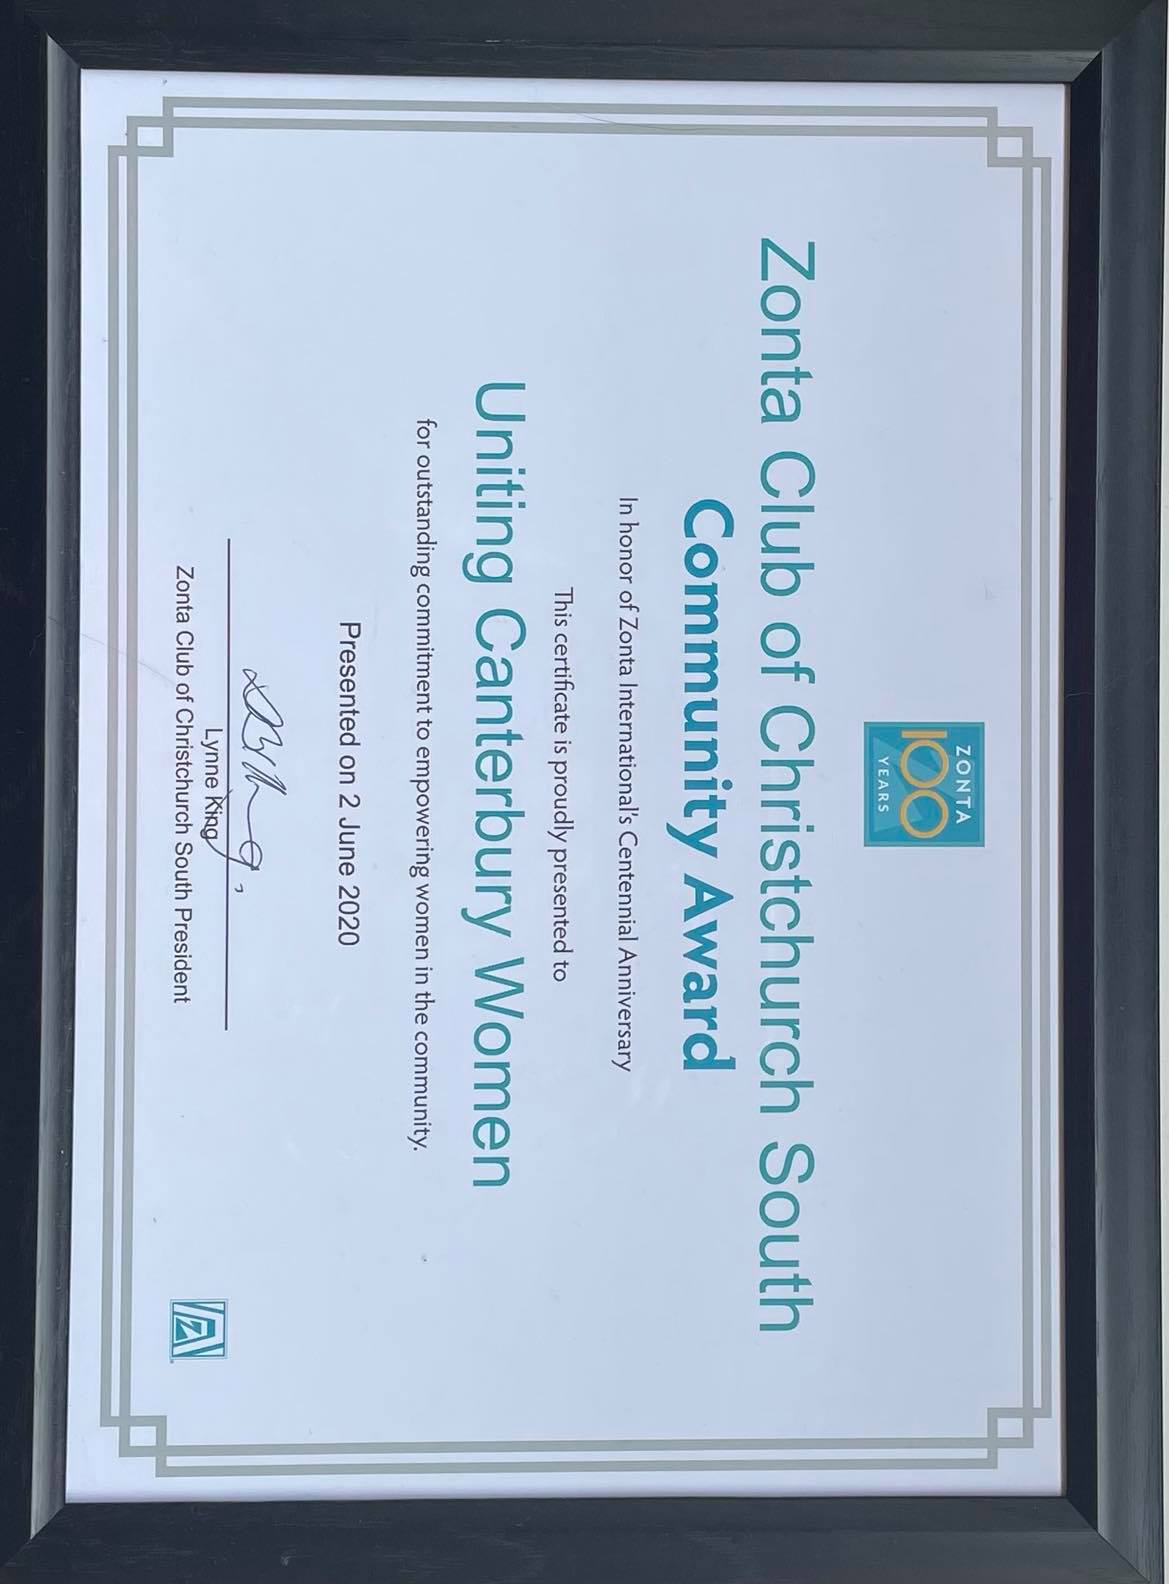 Community Award Certificate